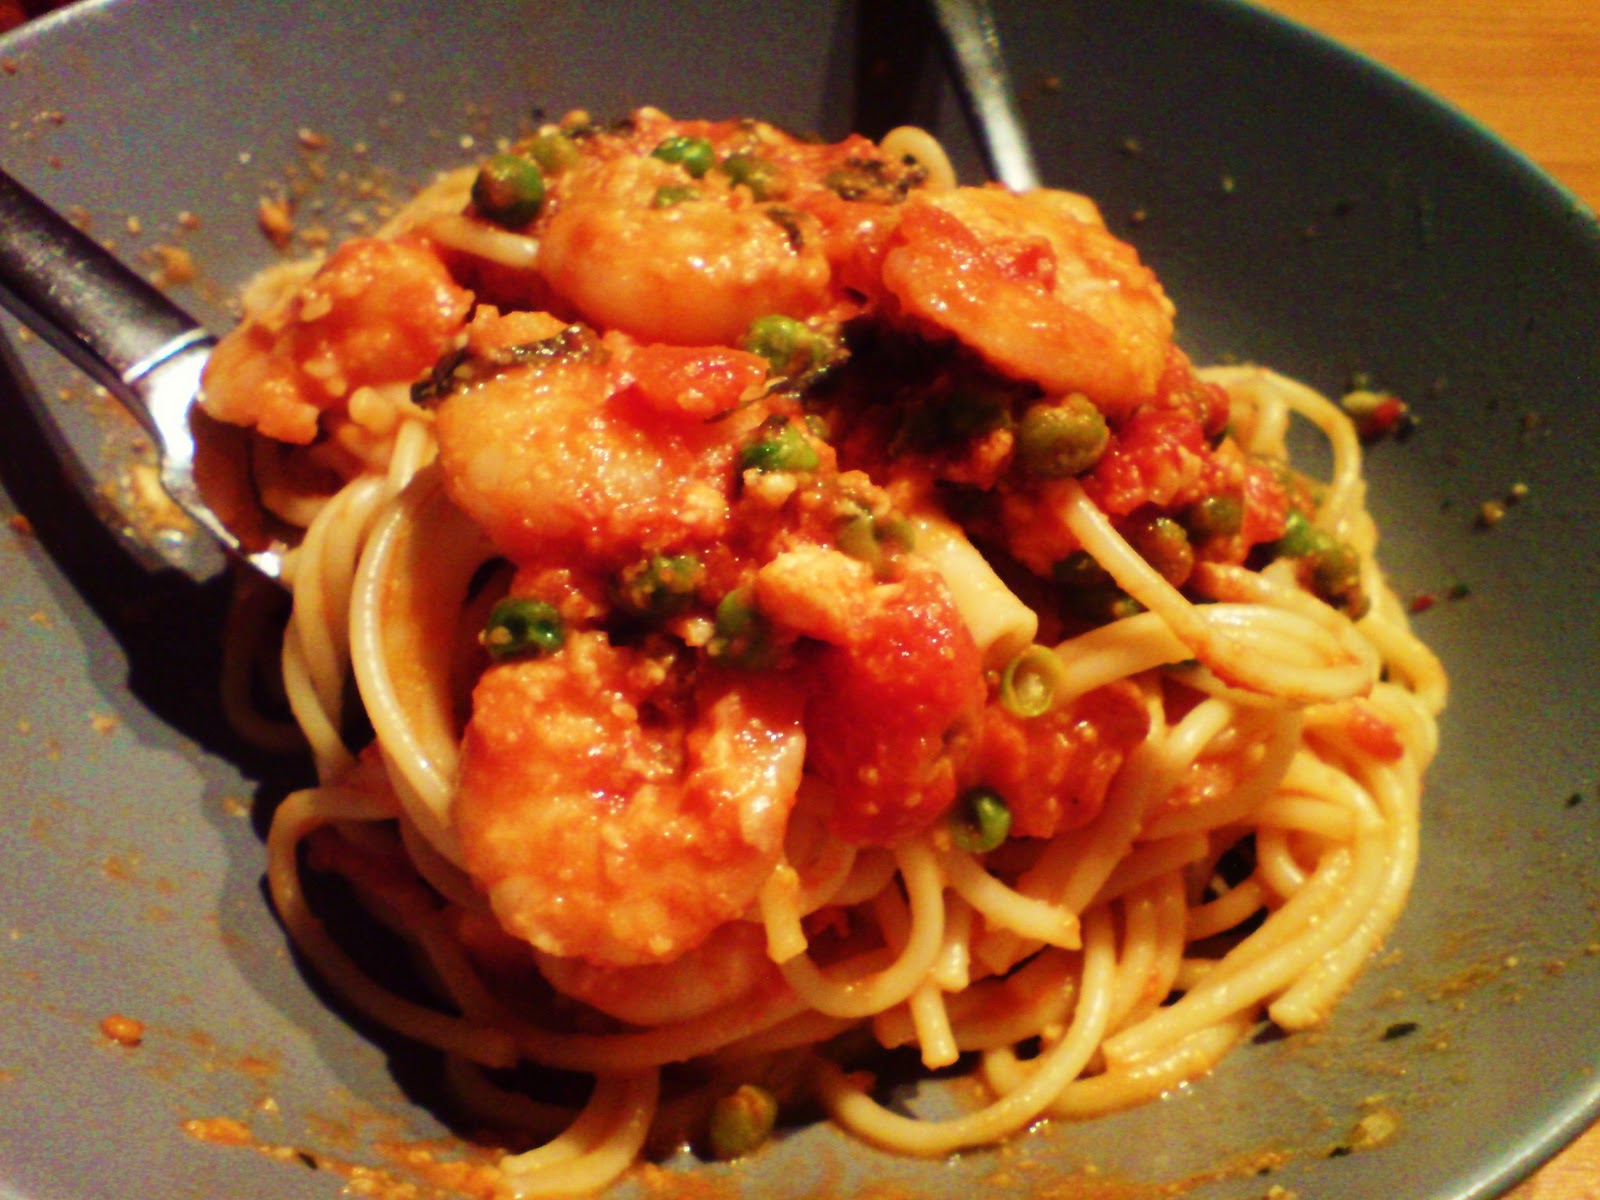 Lilys kleine Hobbykiste: Spaghetti mit Garnelen-Tomaten-Feta-Sauce